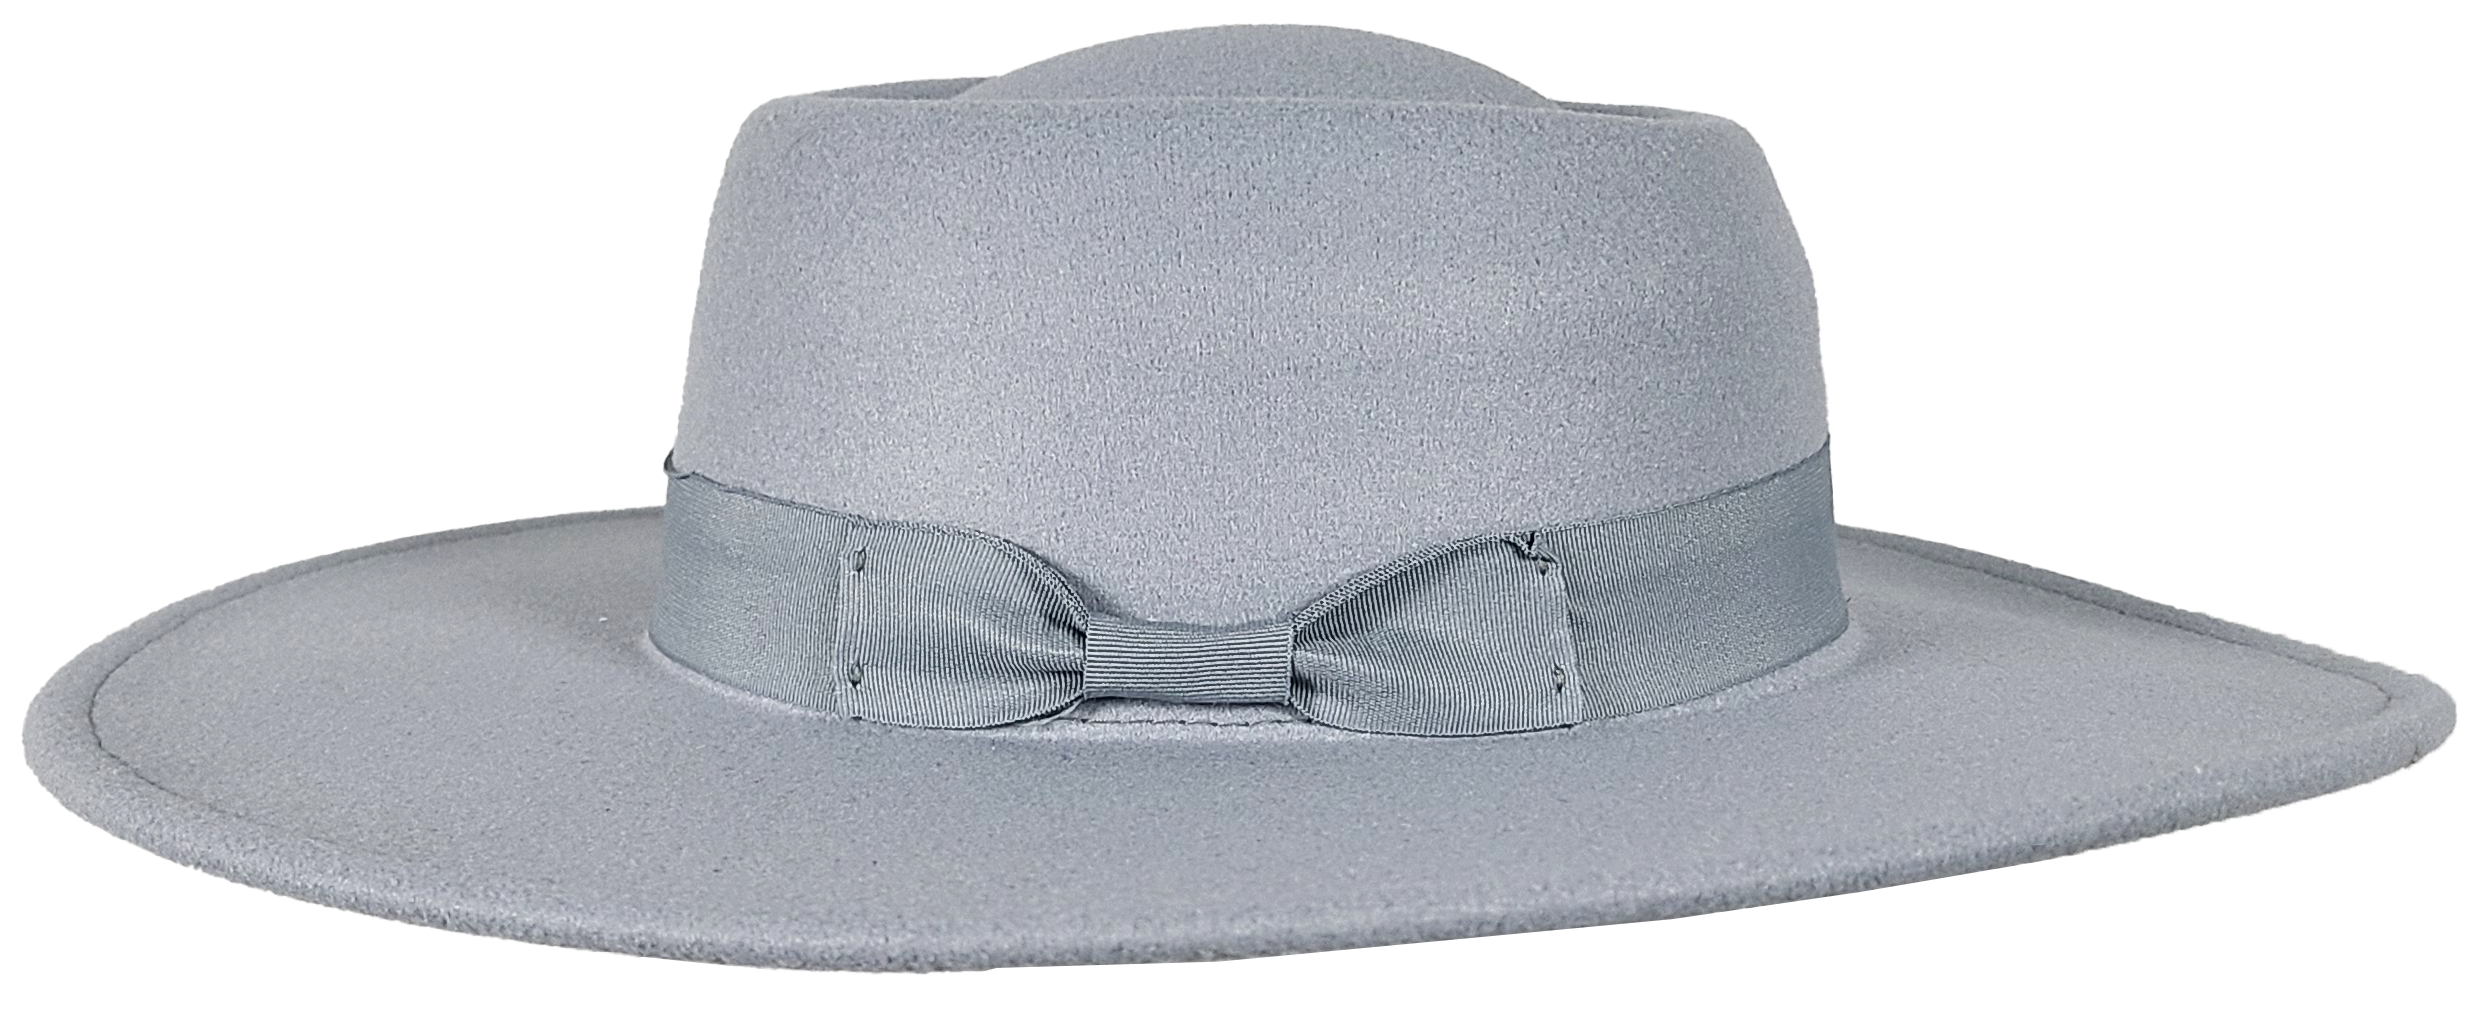 FH-8111 Felt Fedora Hat- Grey